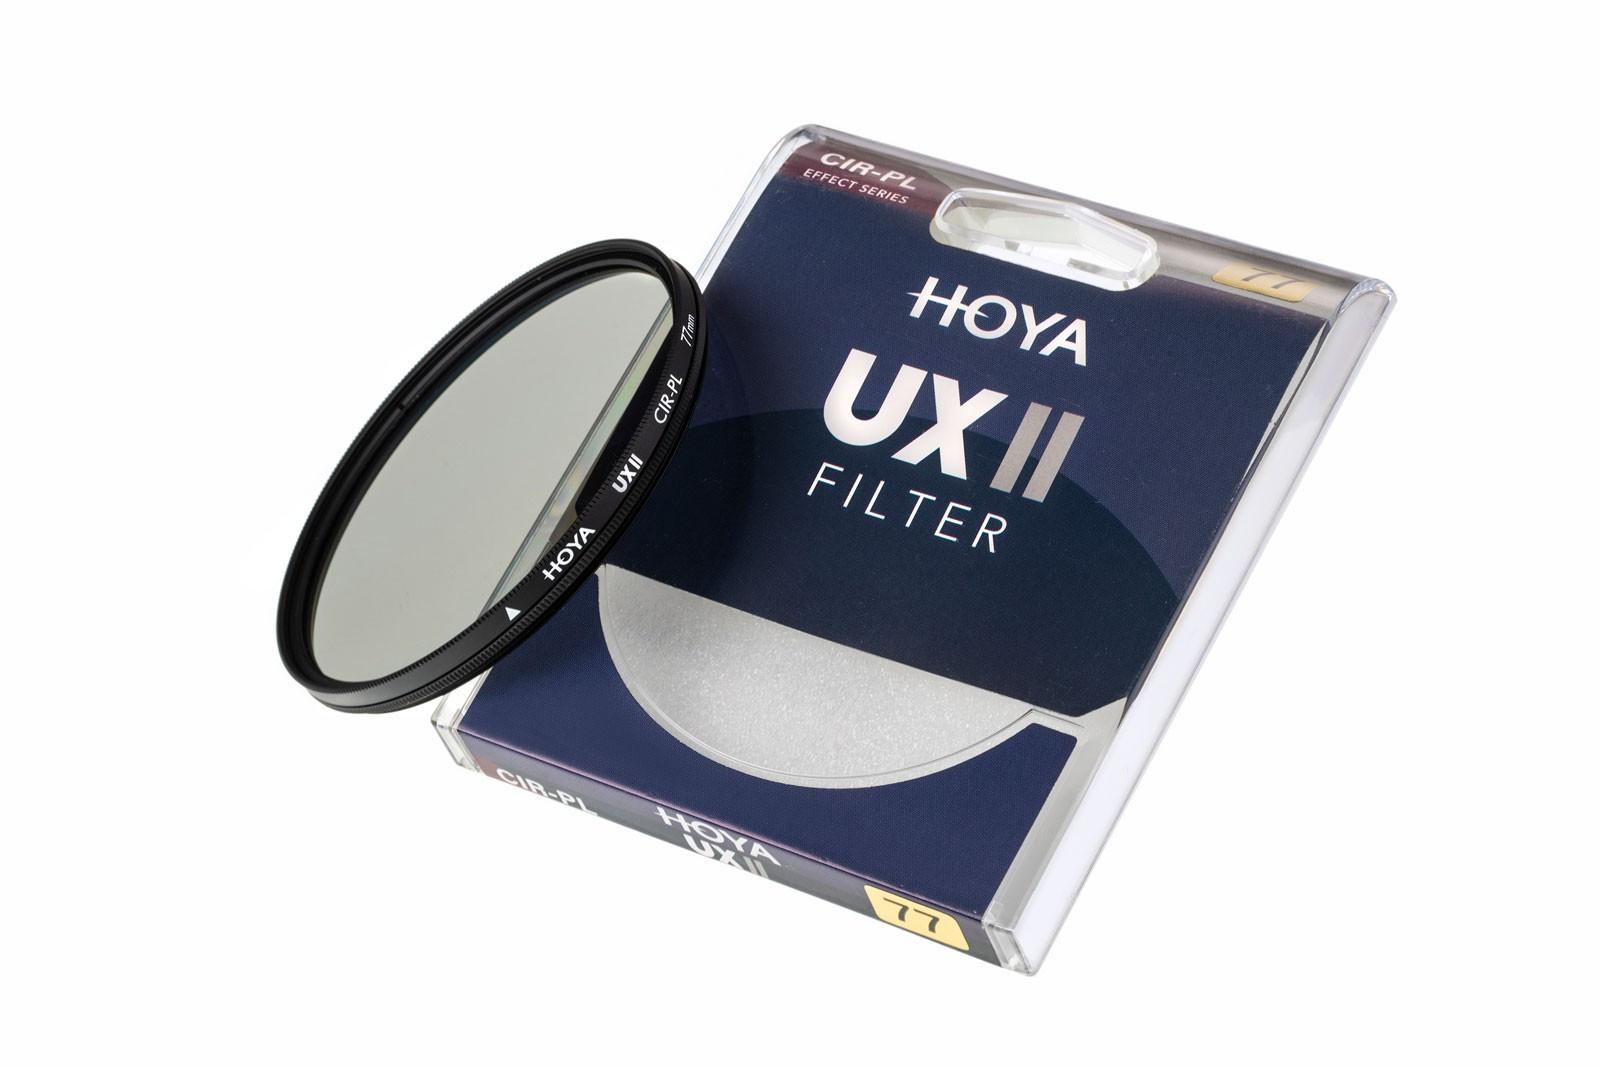 Hoya  Hoya UX II CIR-PL Filtre de caméra polarisant circulaire 7,7 cm 